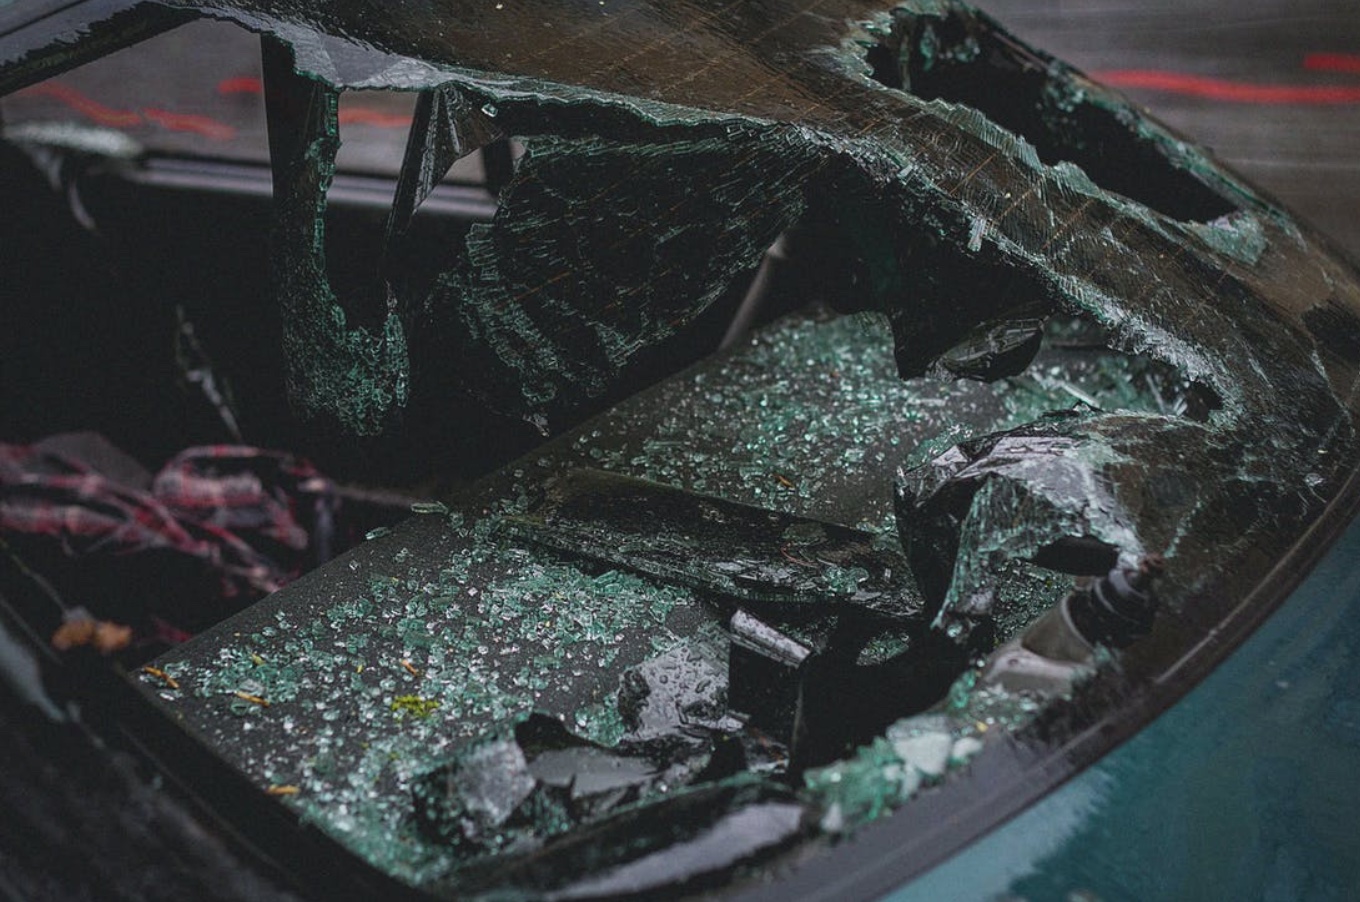 Broken windshield; image by Artyom Kulakov, via Pexels.com